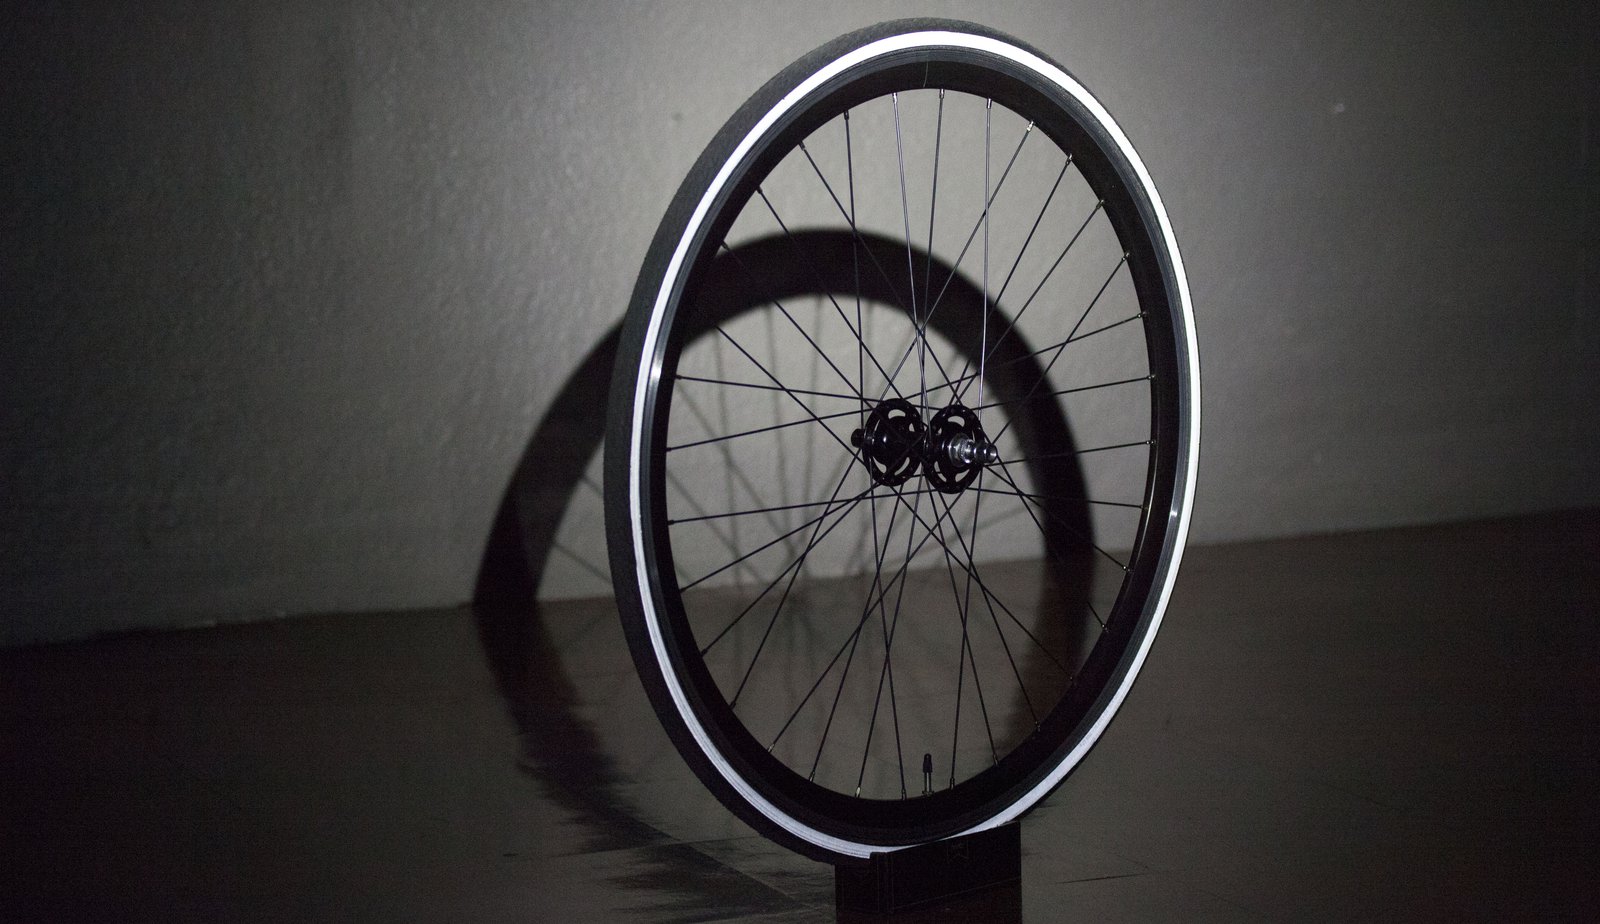 LIT - Ultra-reflective Bike Tire